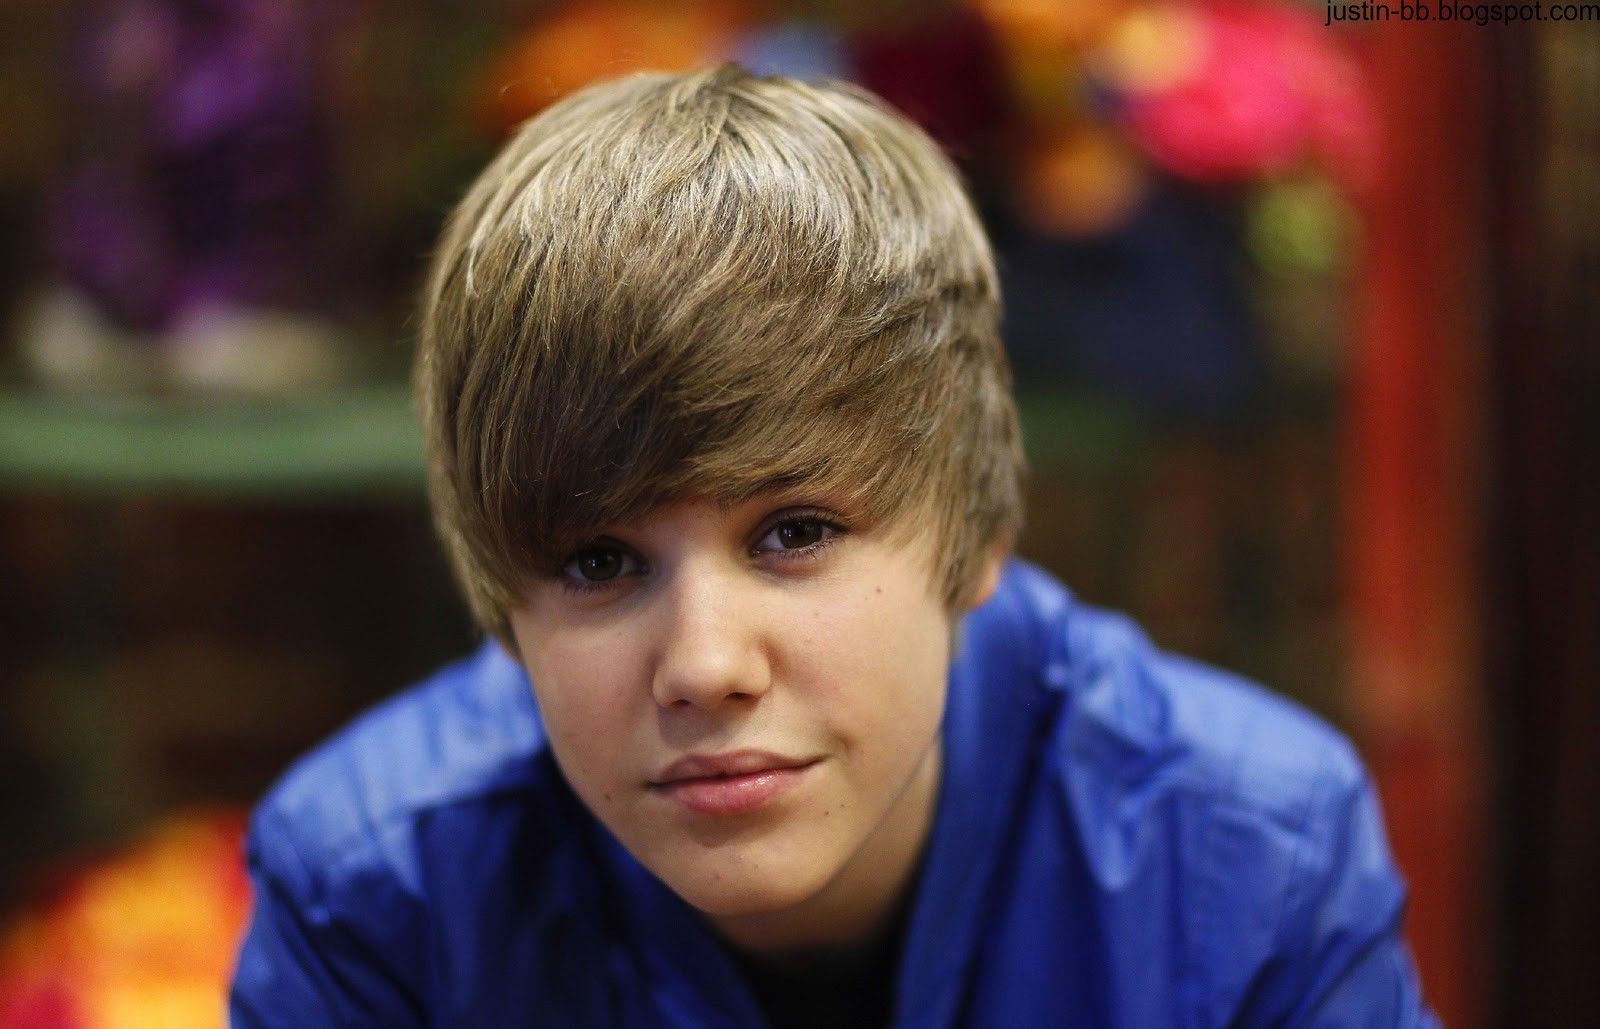 Justin-Bieber-face-cute-hd-wallpapers.jpg